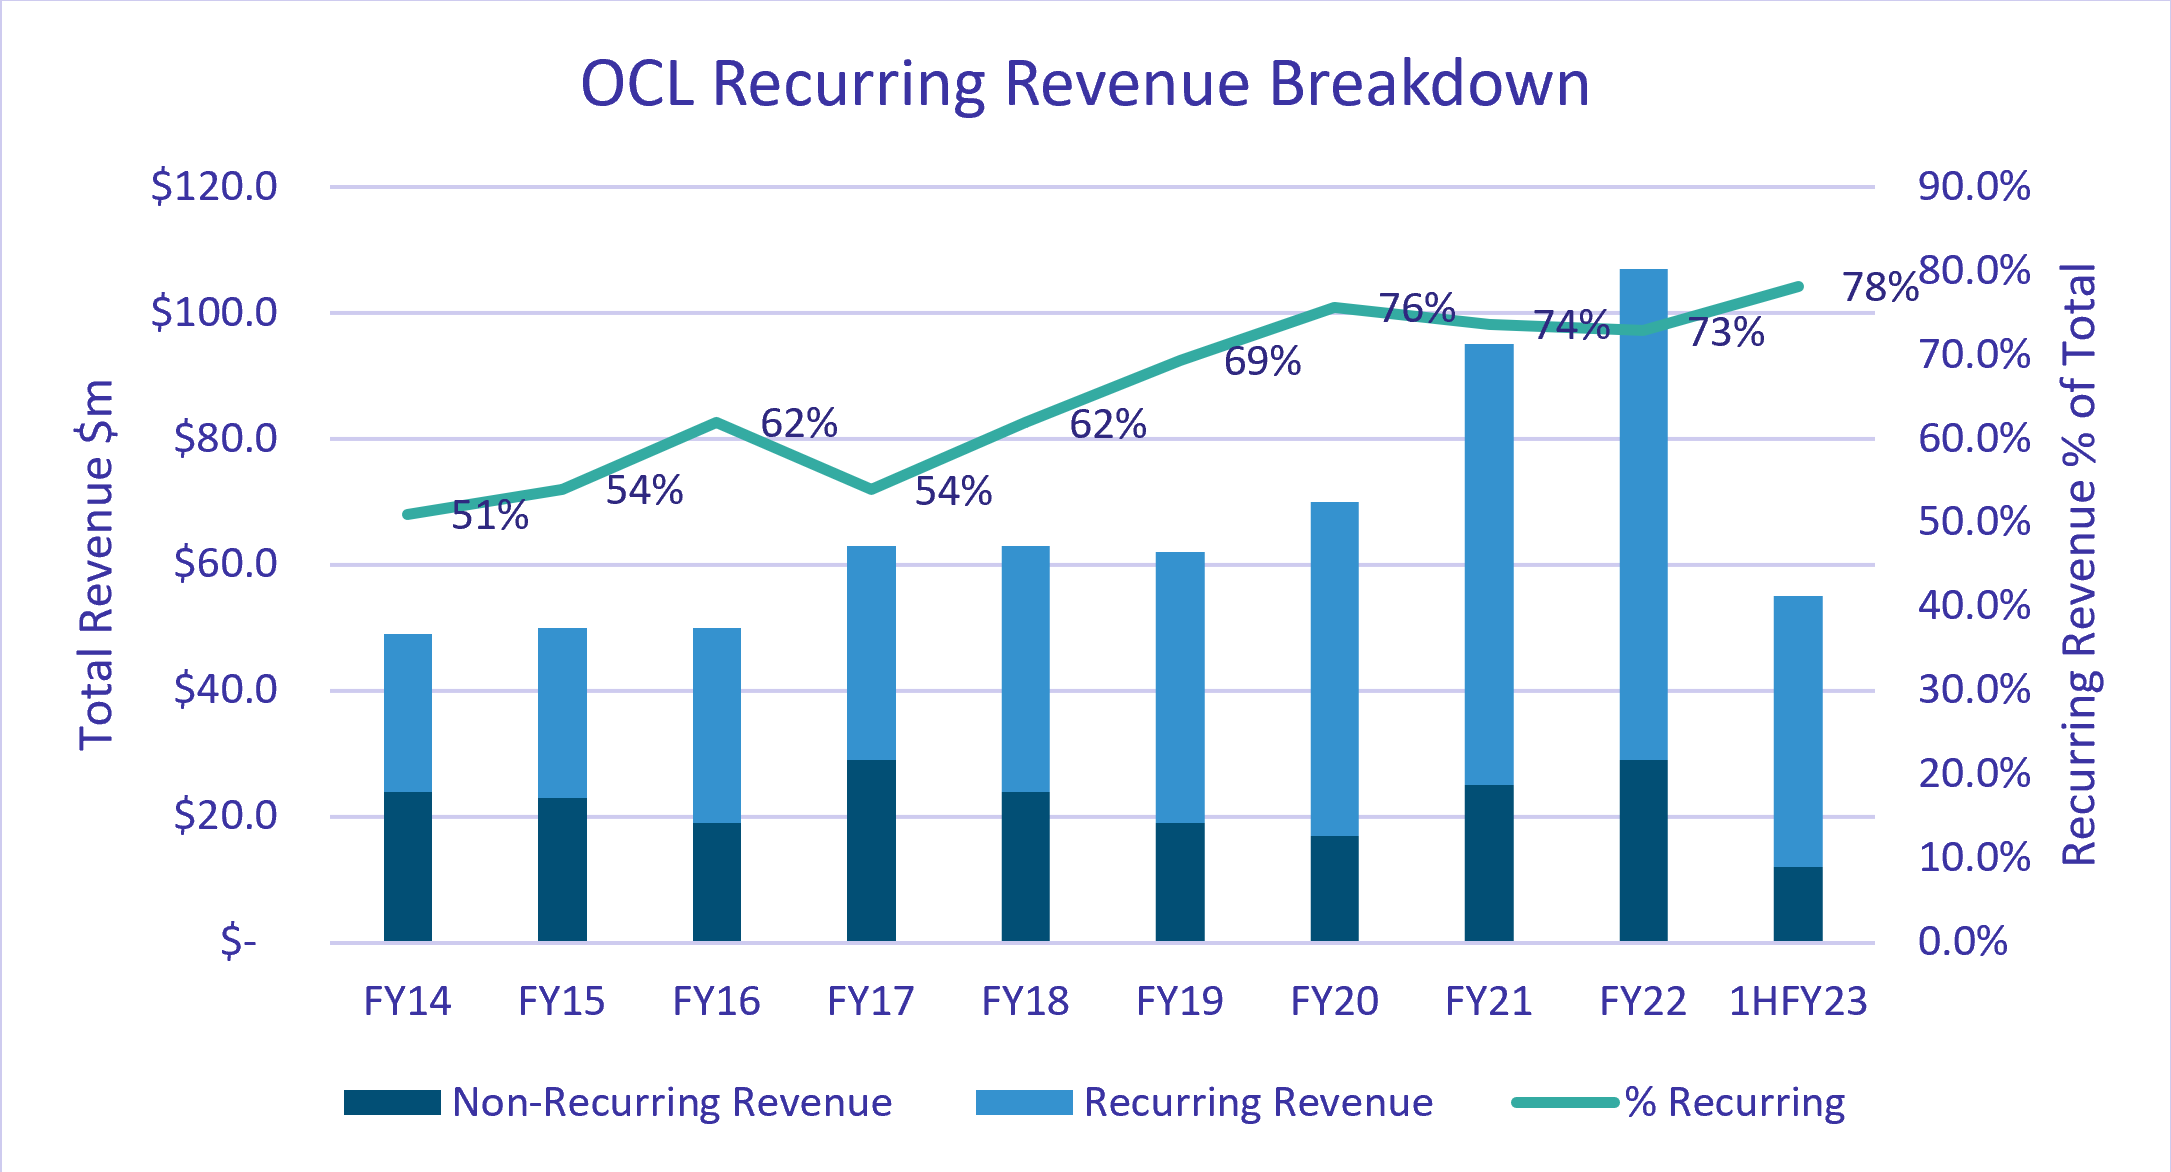 Source: OCL 1HFY23 Investor Presentation